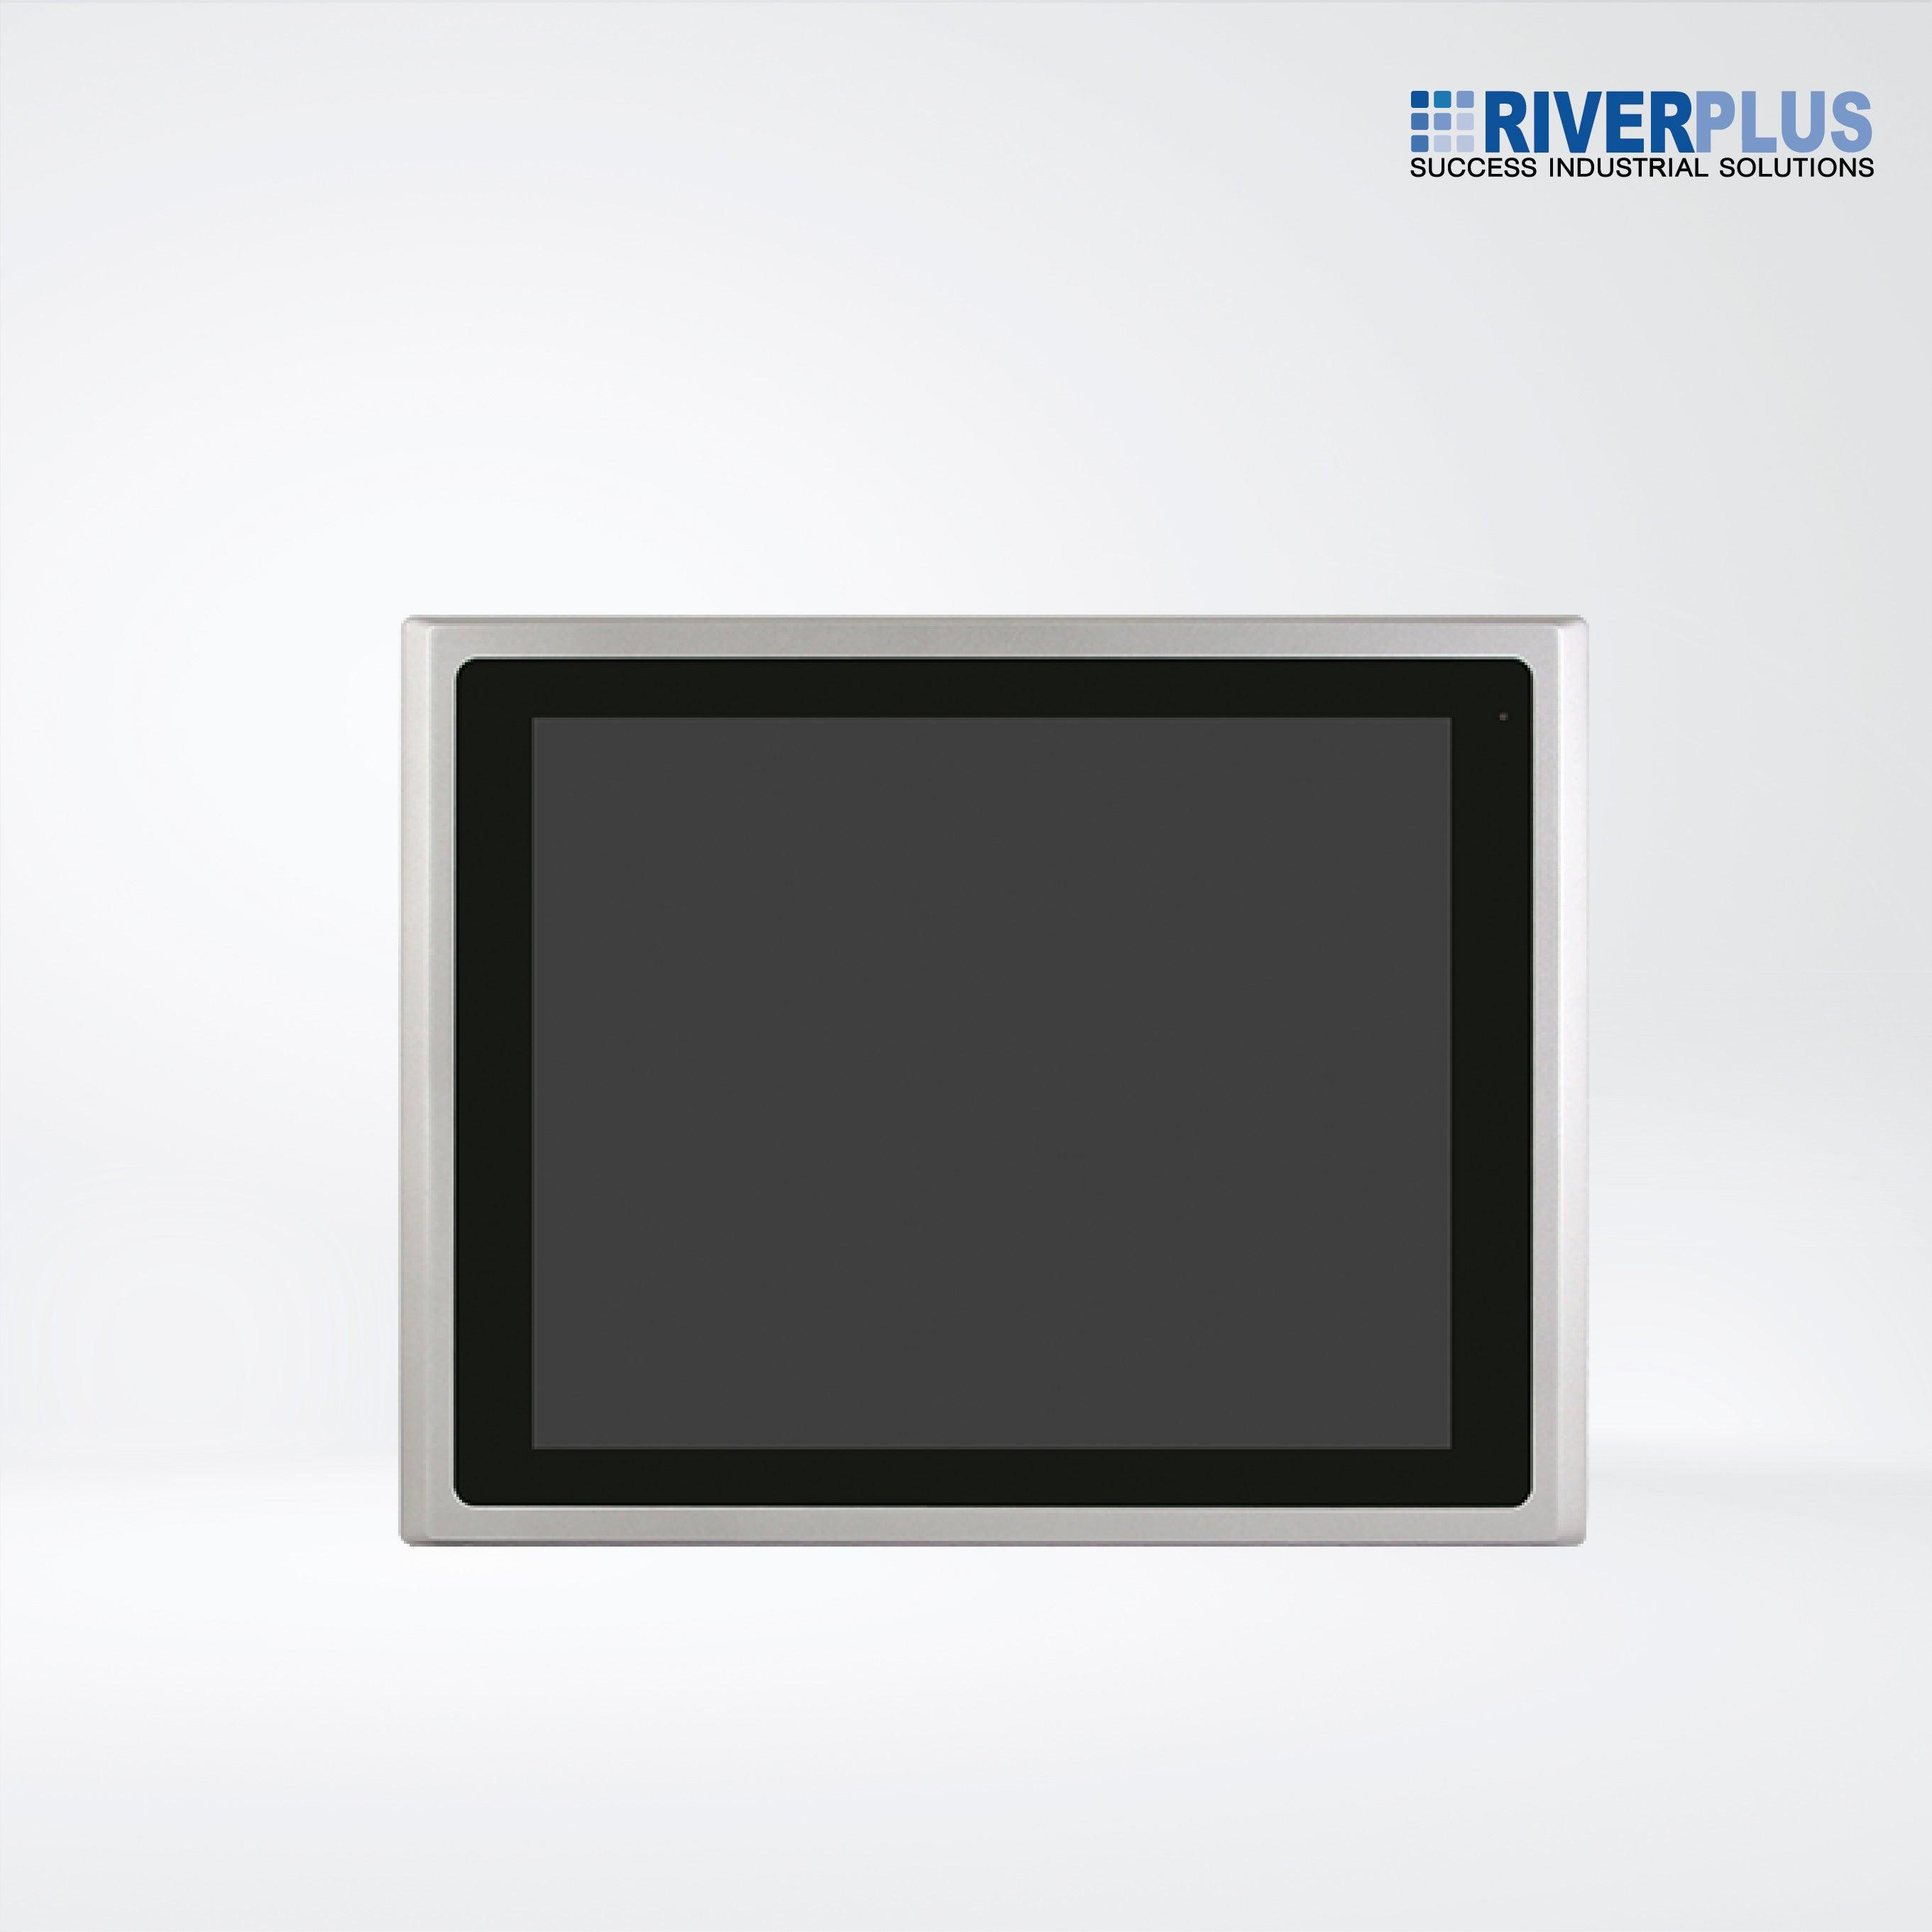 ViPAC-817R 17” Intel Celeron N2930 Fanless Expandable Panel PC - Riverplus